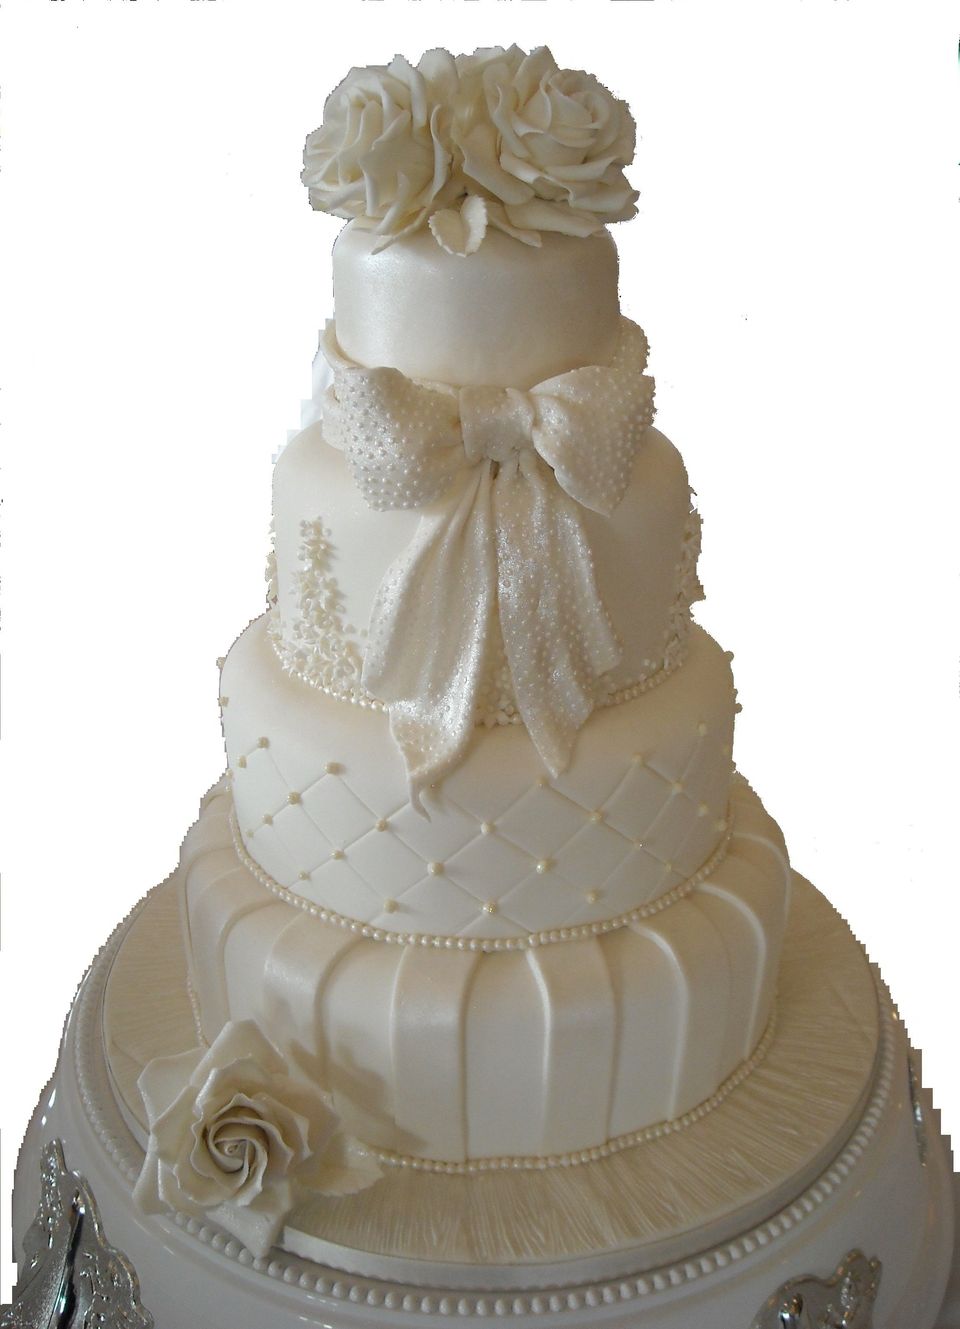 Cakey Lulu's Luxury Dorset-based wedding cakes | Wedding Assistant